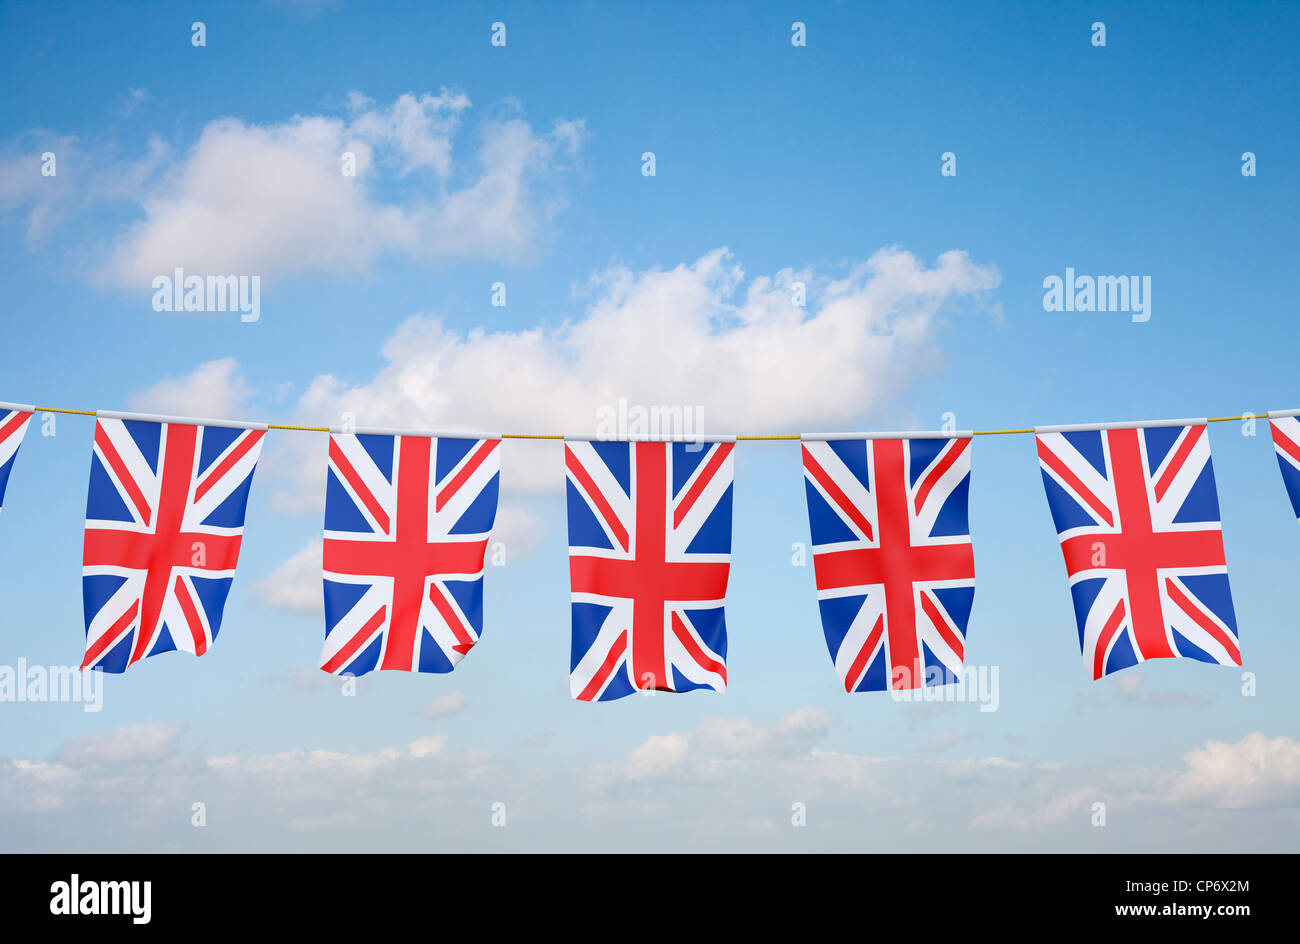 Bunting with Union Jack UK flag against blue sky Stock Photo